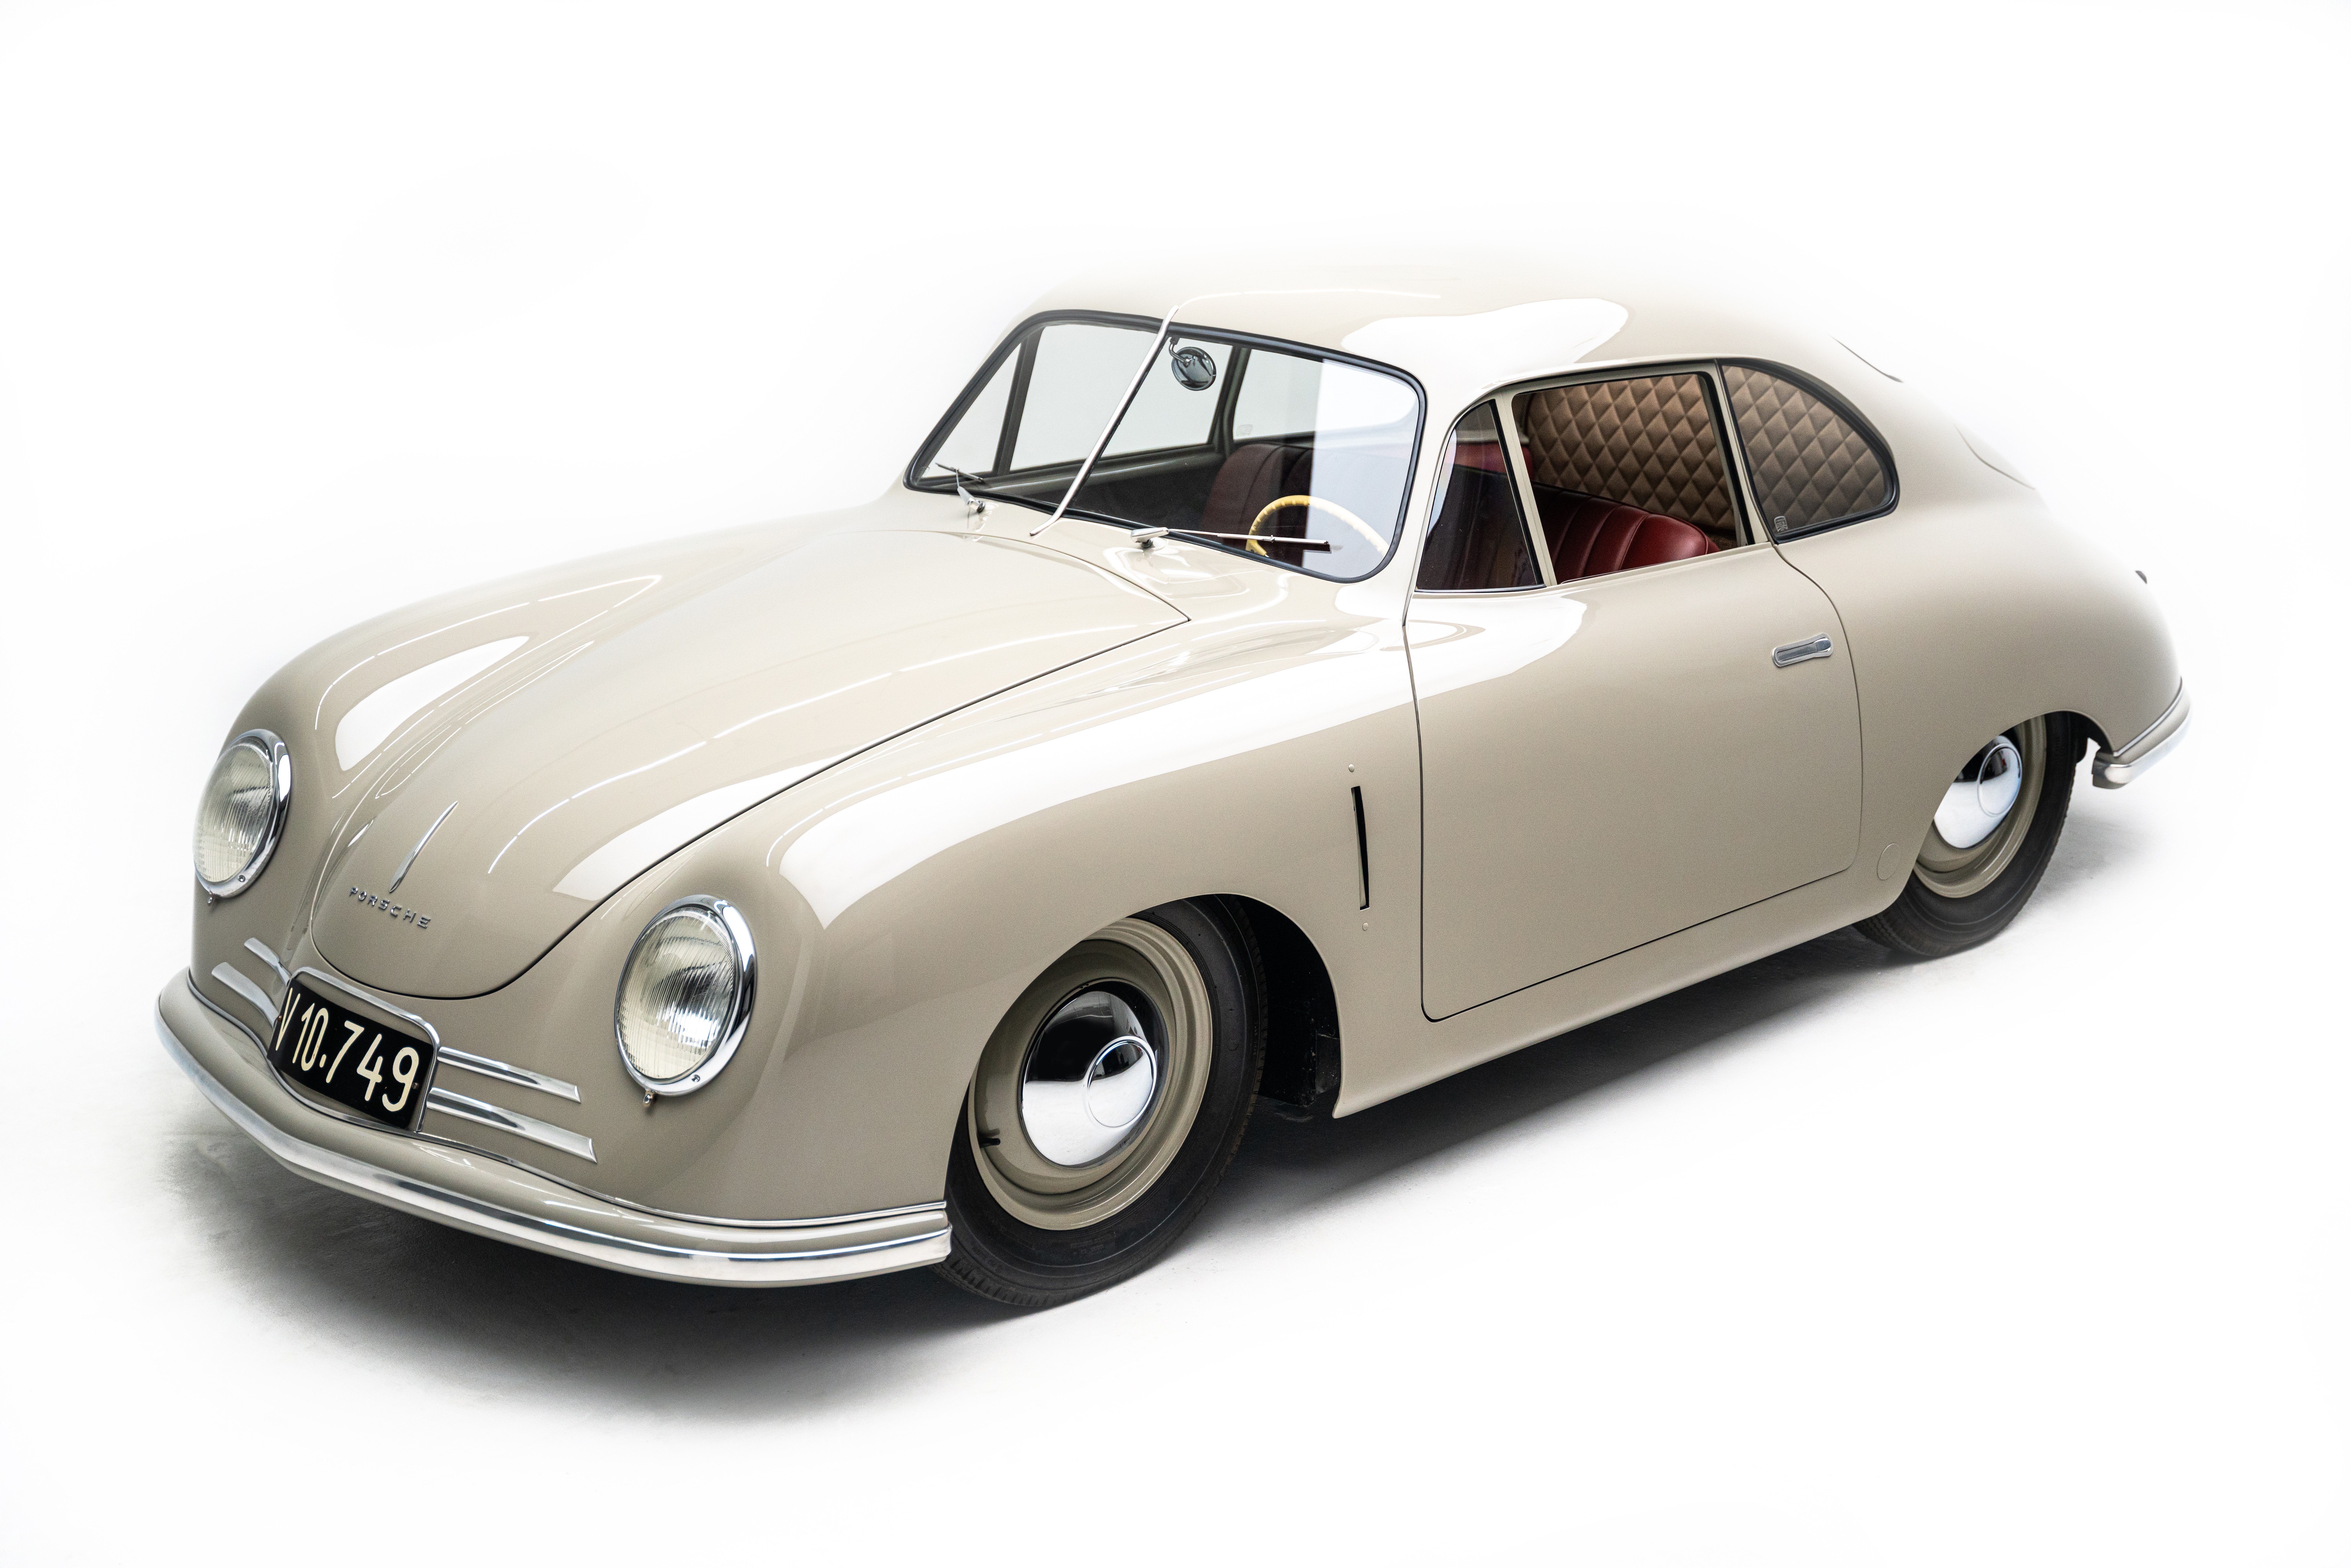 A Brief History On The 356 Gmünd, The First Porsche